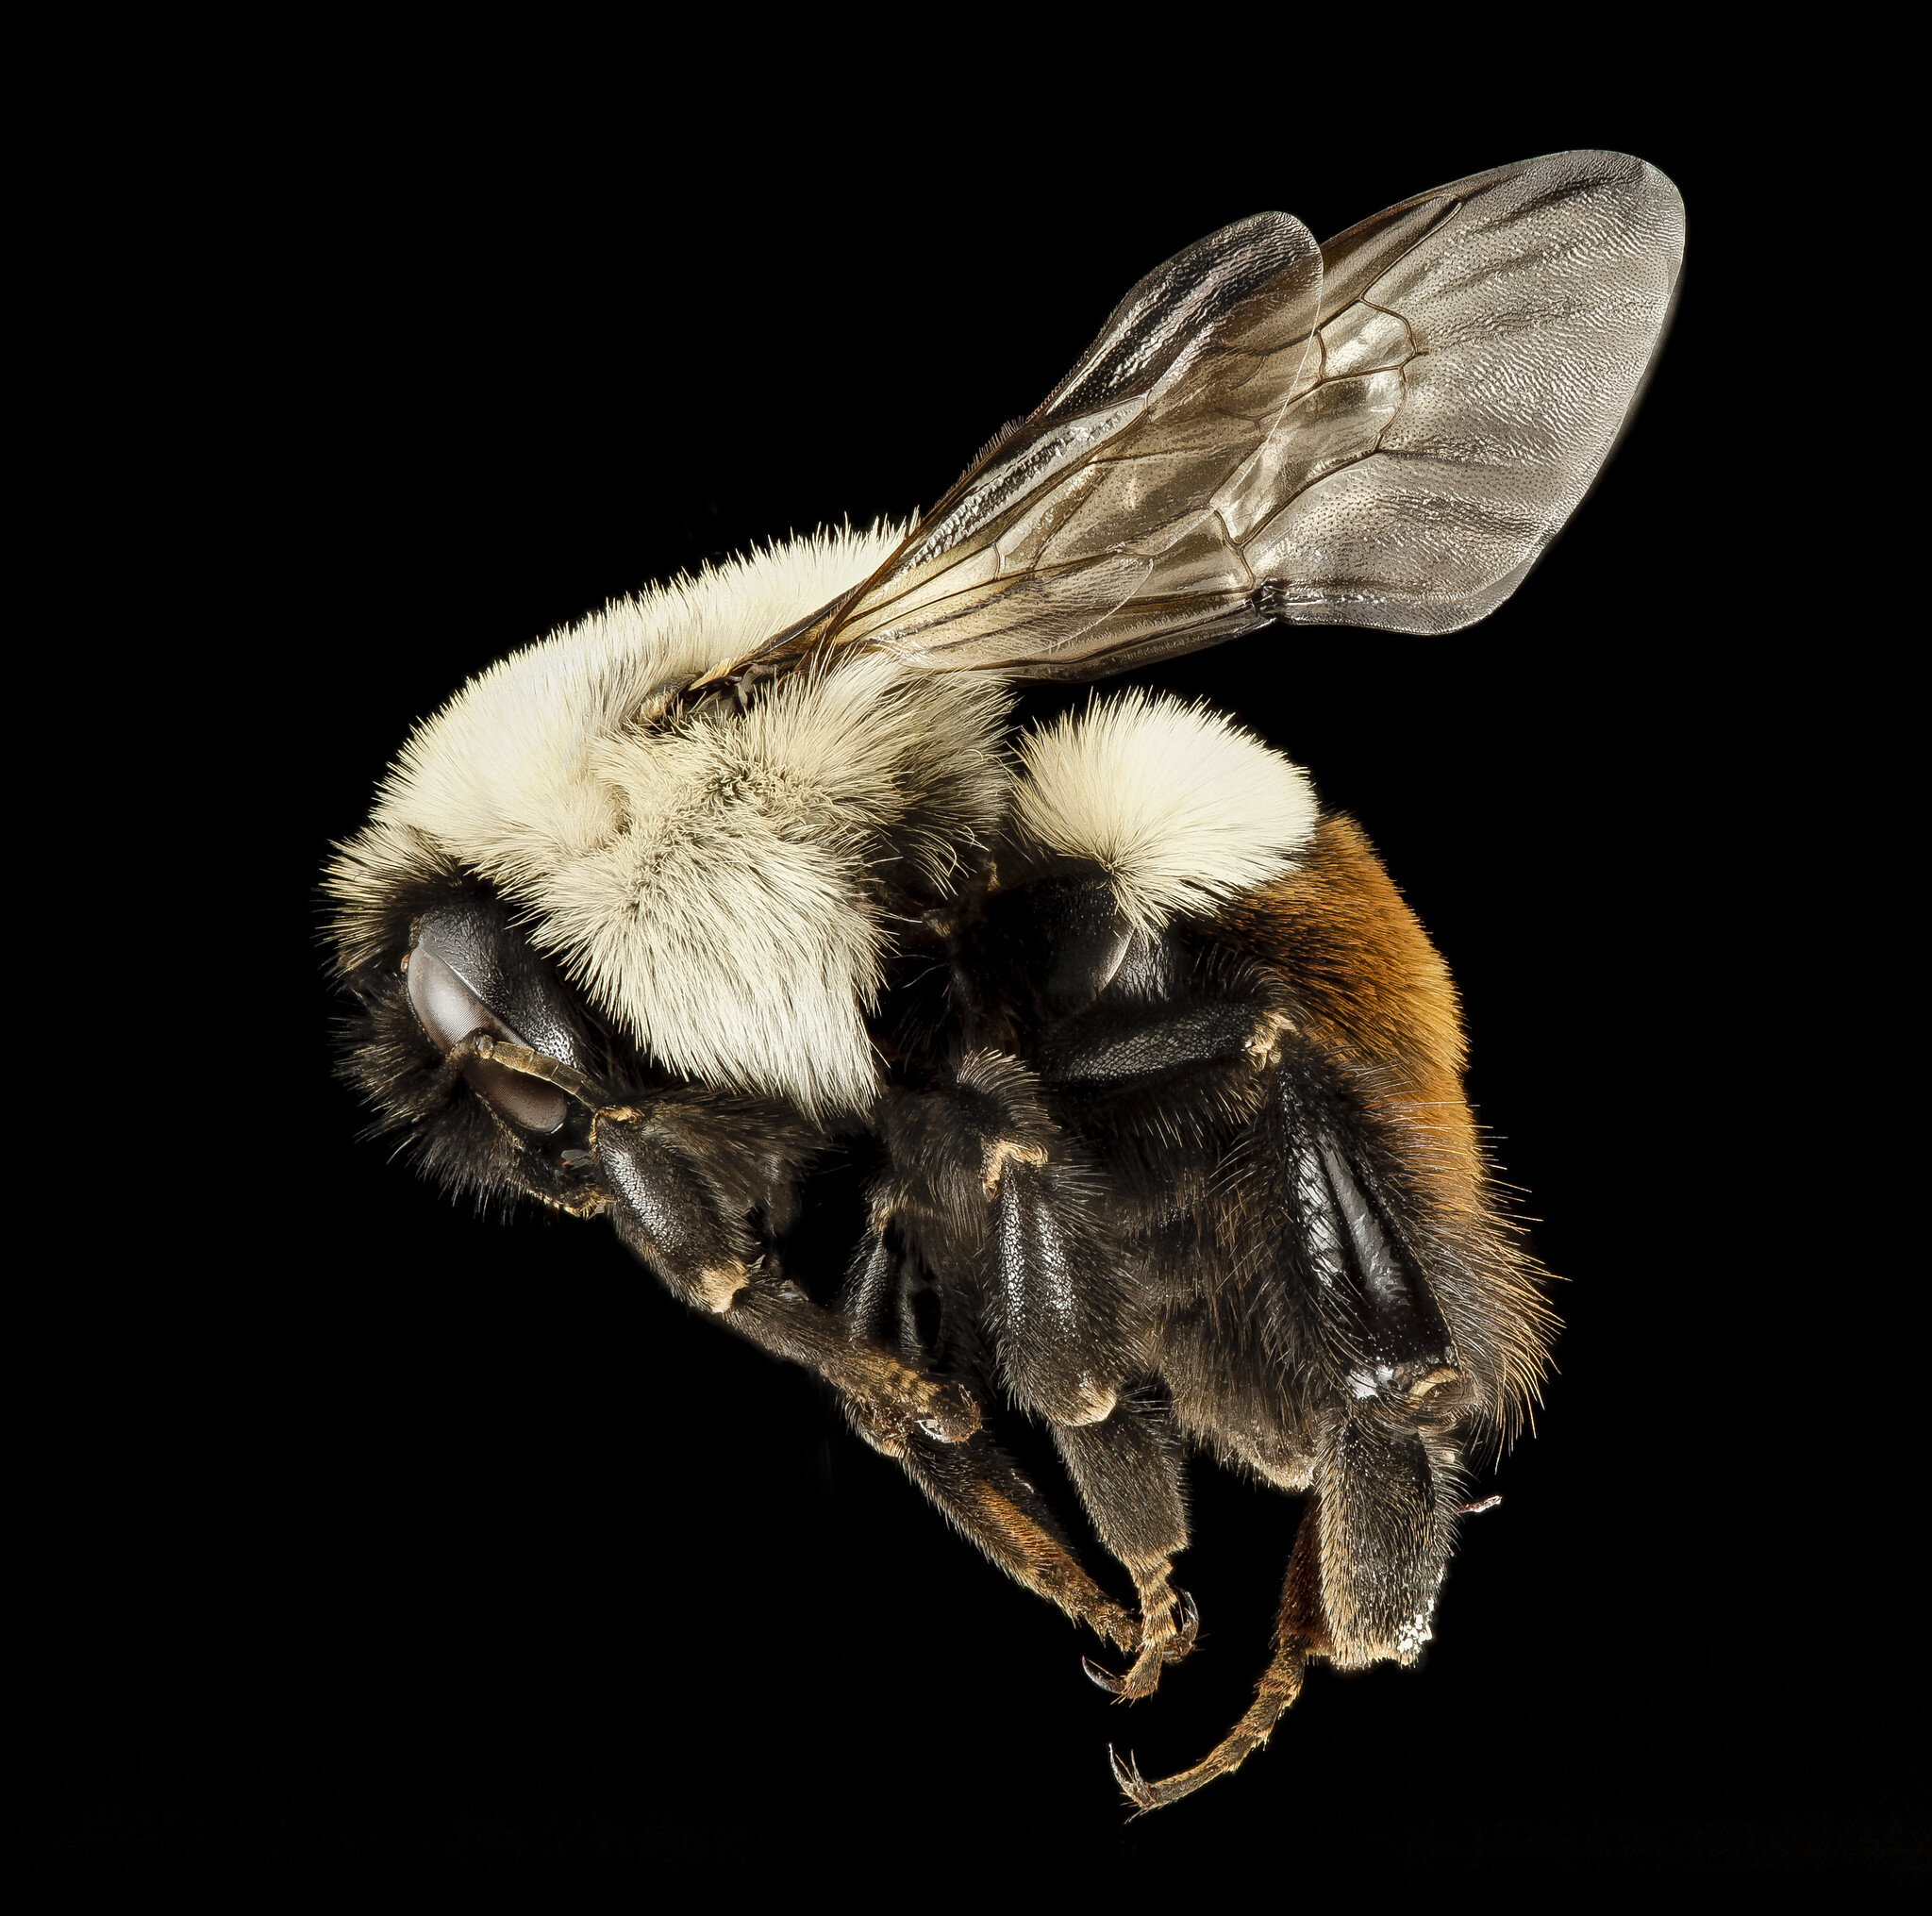 Rising temperatures overcook bumblebees' brunch